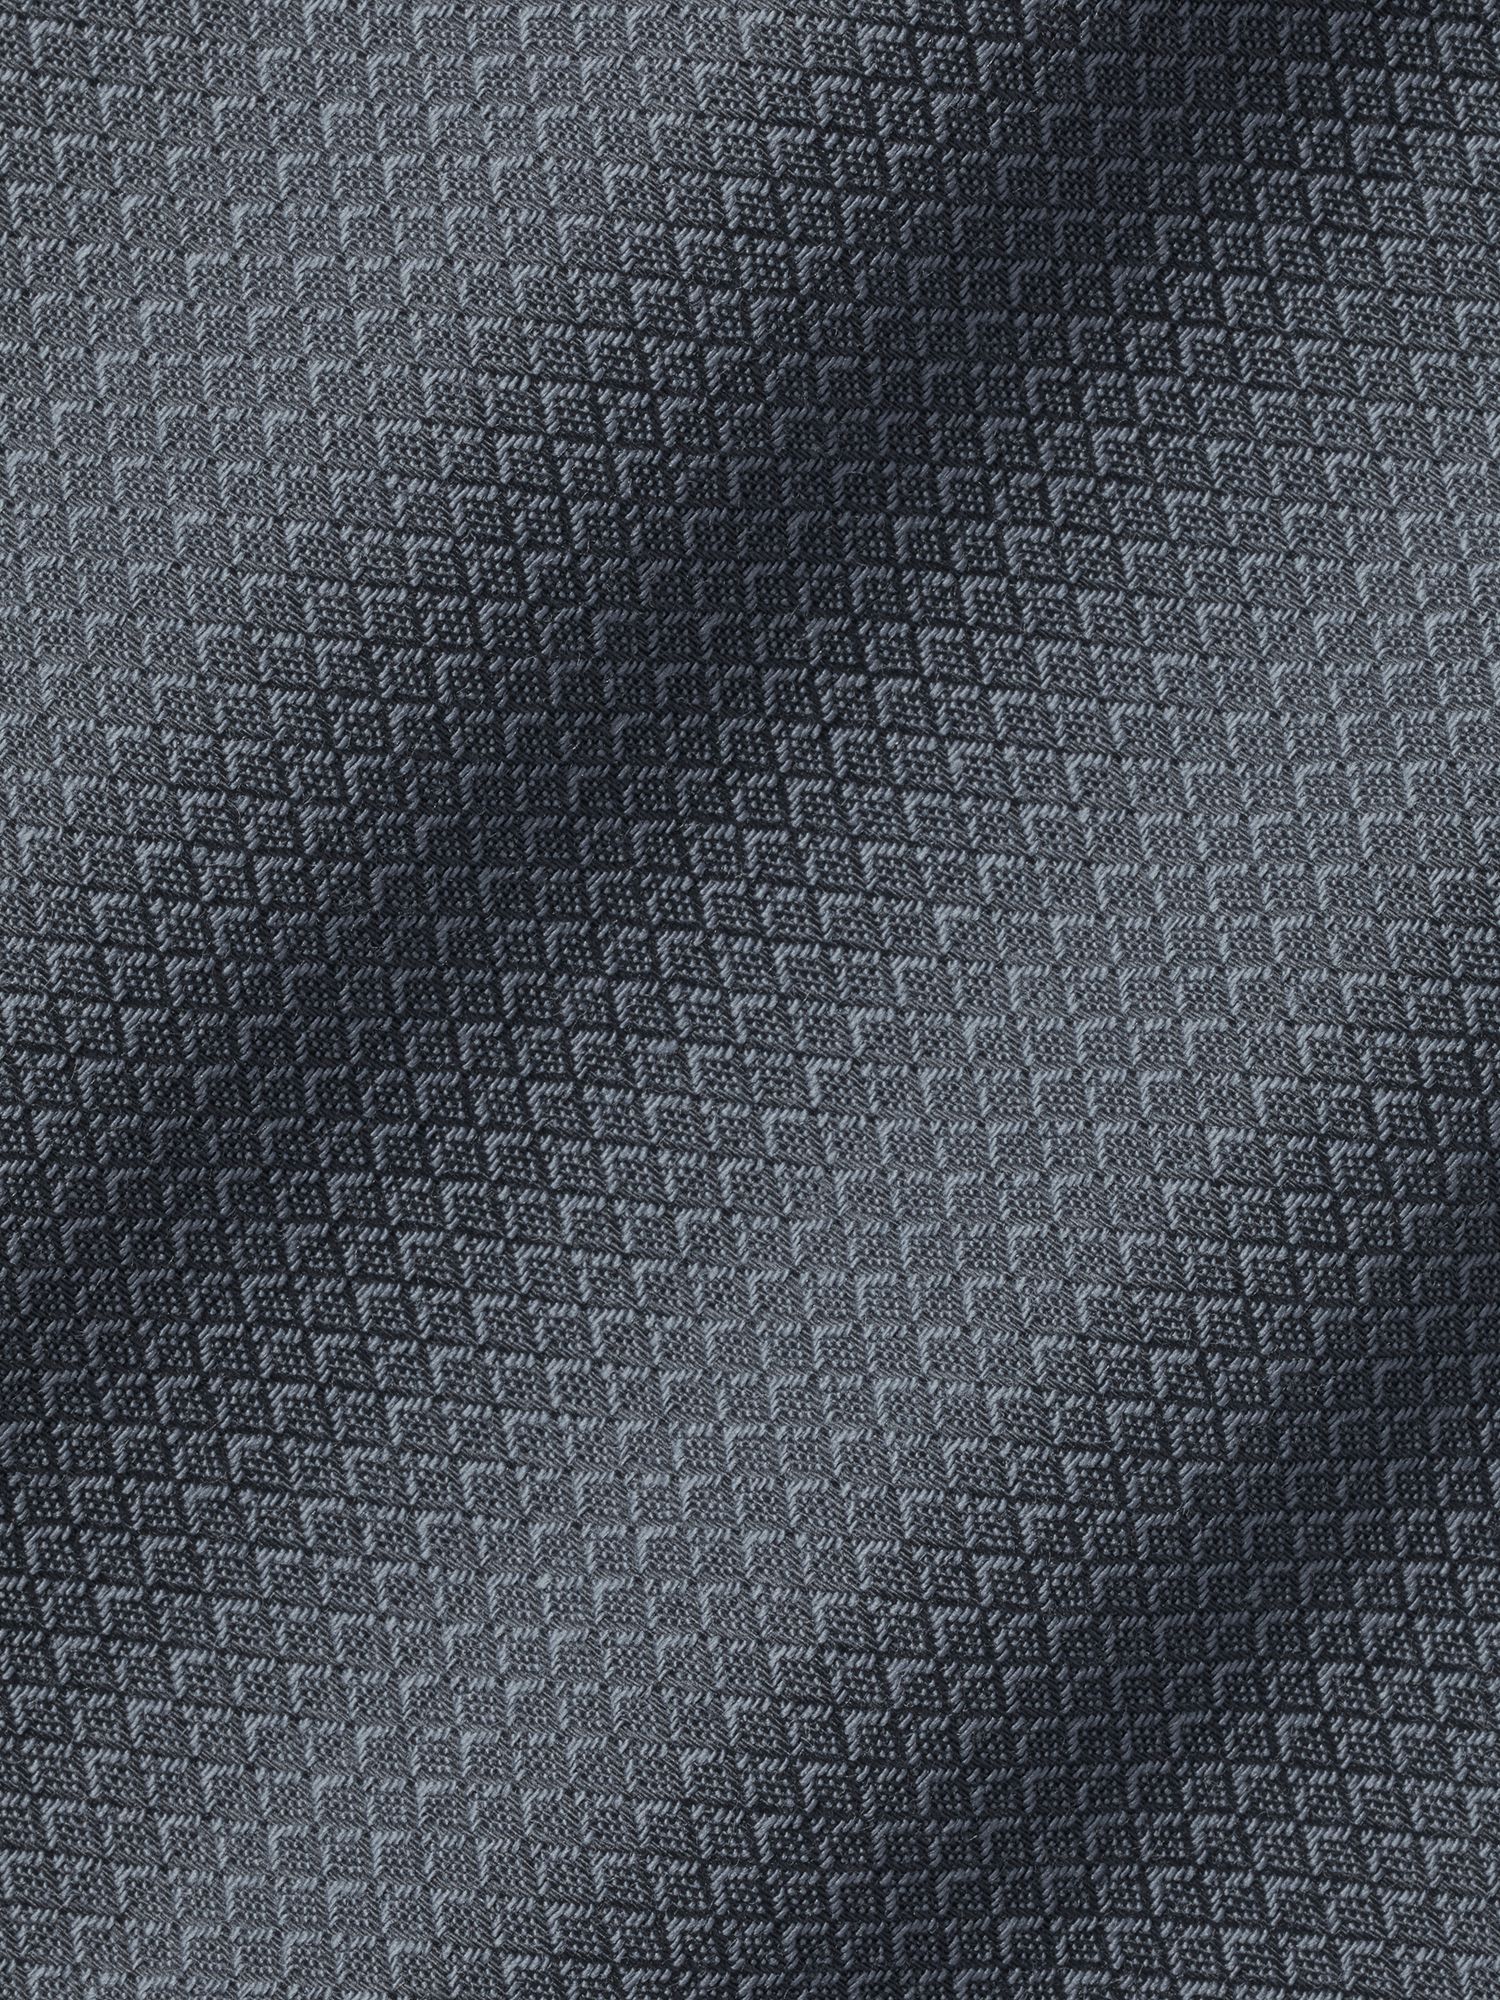 Charles Tyrwhitt Diamond Stretch Texture Non-Iron Slim Fit Shirt, Charcoal Grey, 14.5